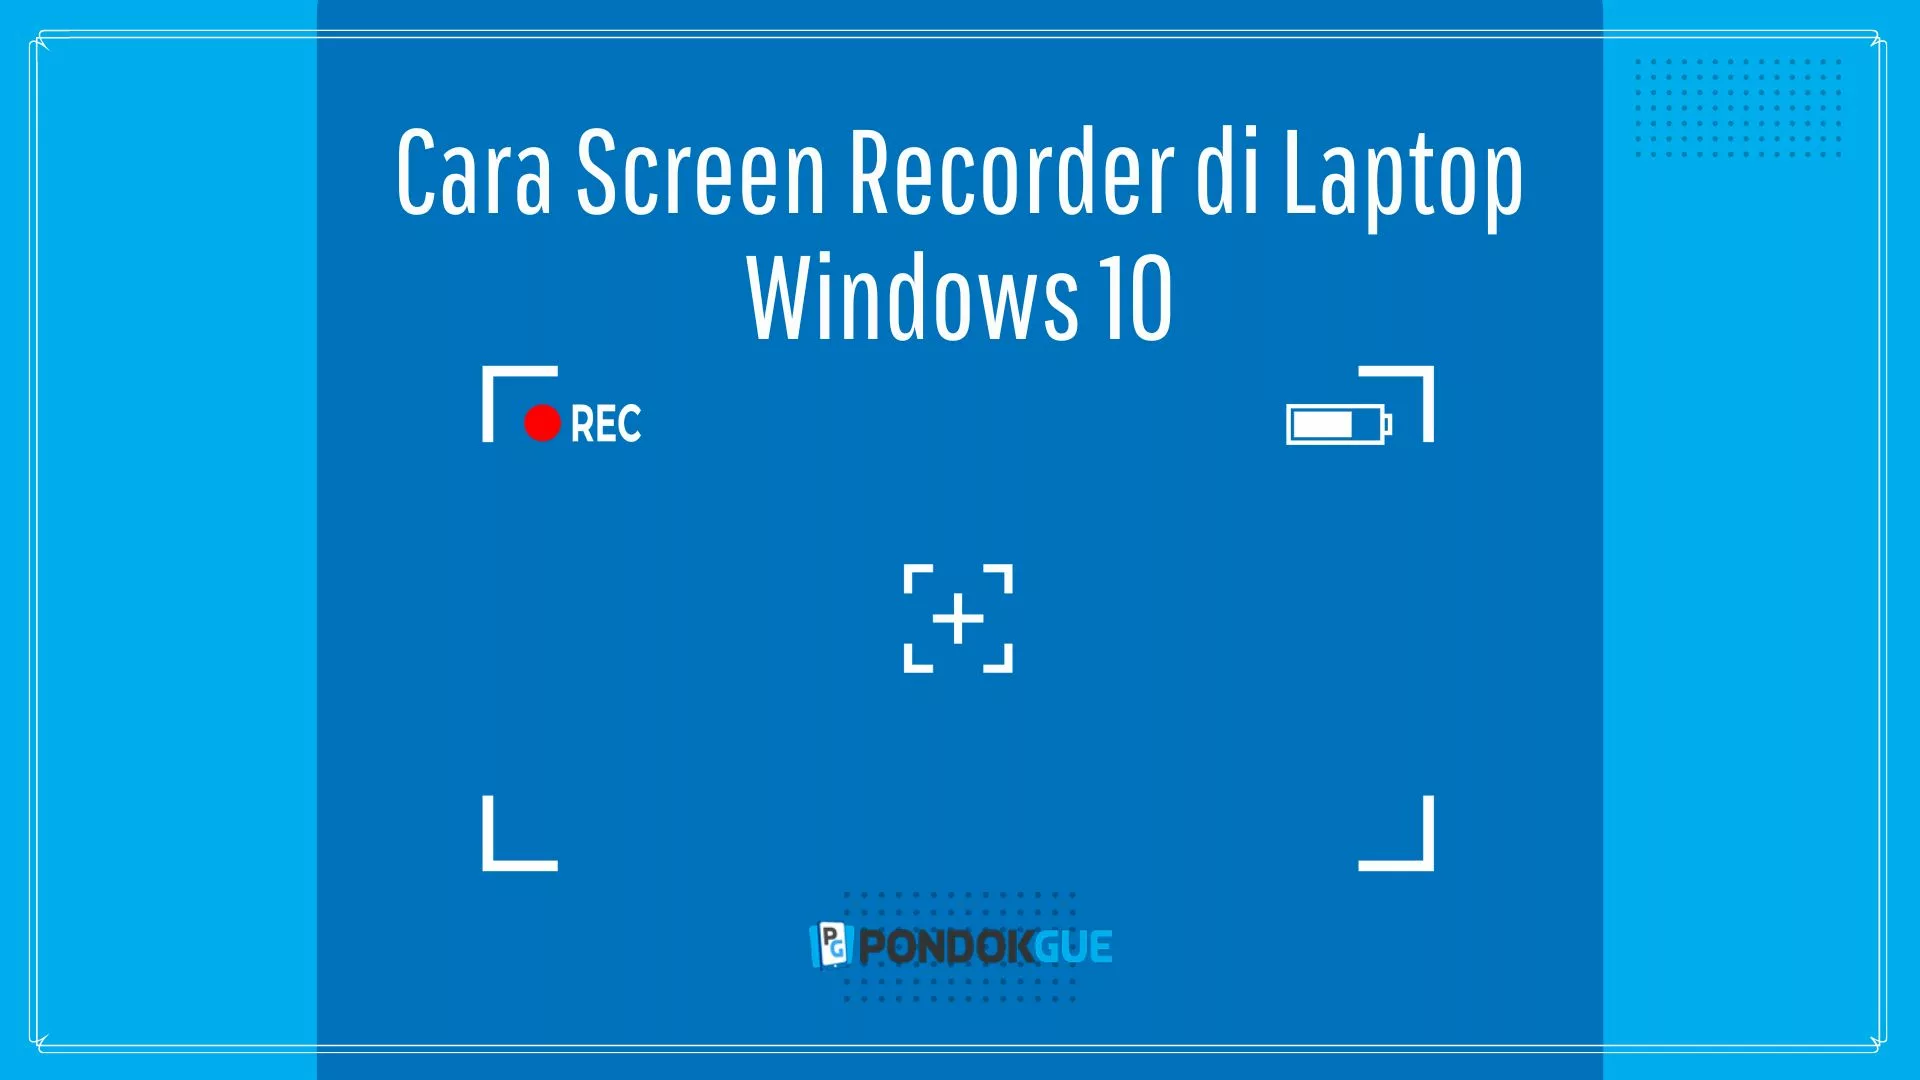 Cara Screen Recorder di Laptop Windows 10